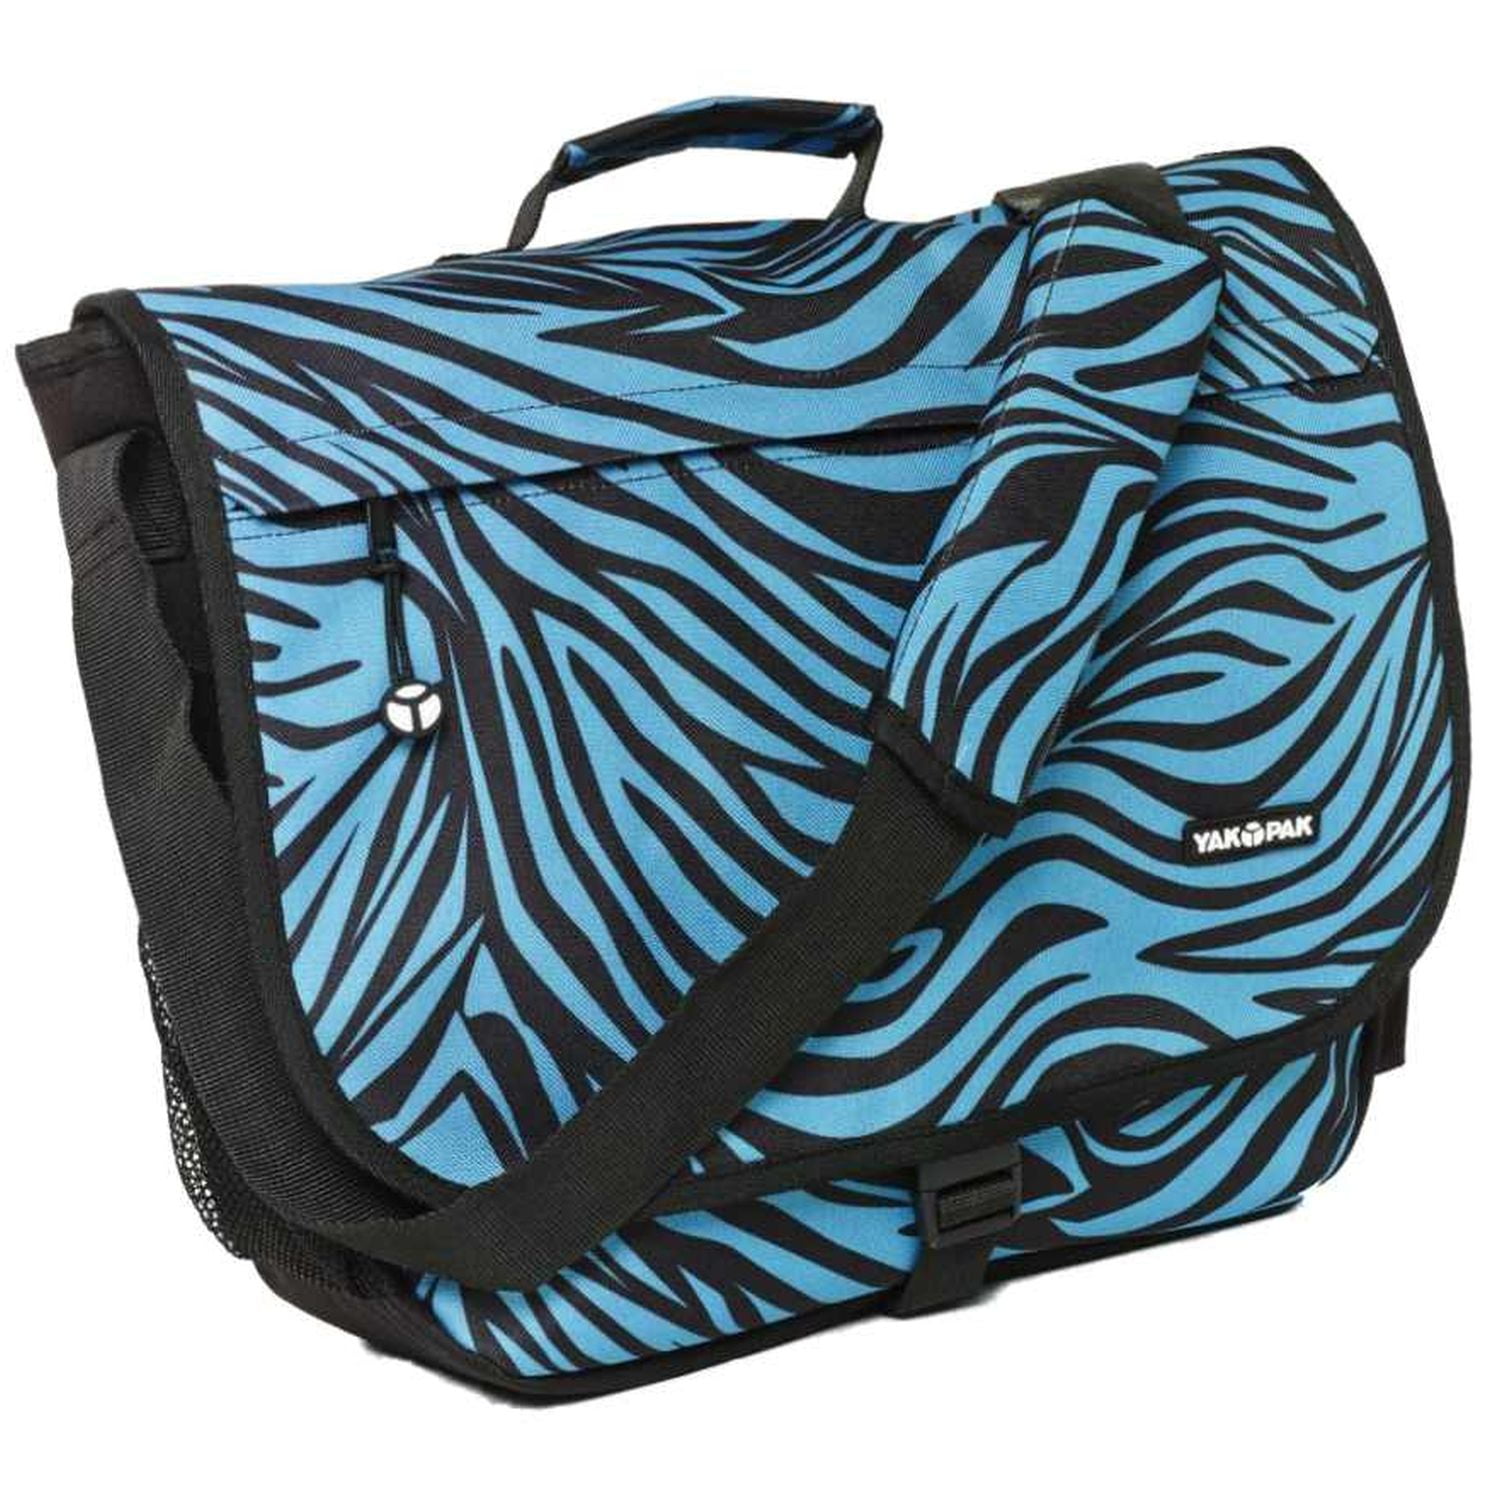 PU Leather Shoulder Bag,Animal Yak Oil Paintings Backpack,Portable Travel School Rucksack,Satchel with Top Handle